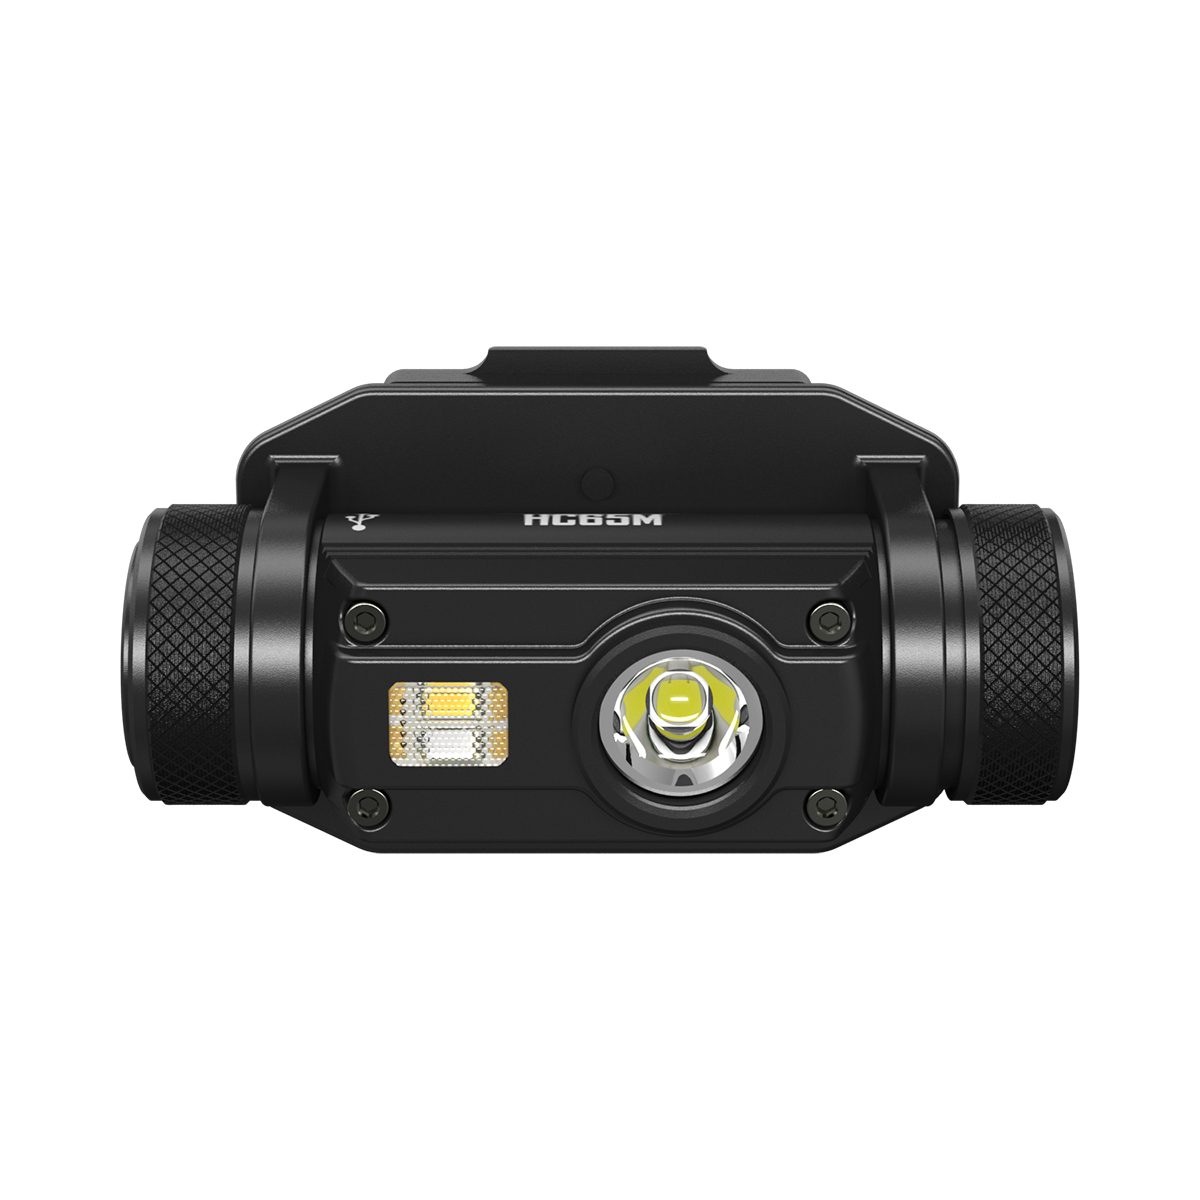 Nitecore HC65M Luminus SST-40-W LED 1750 Lumens Red Light Headlamp